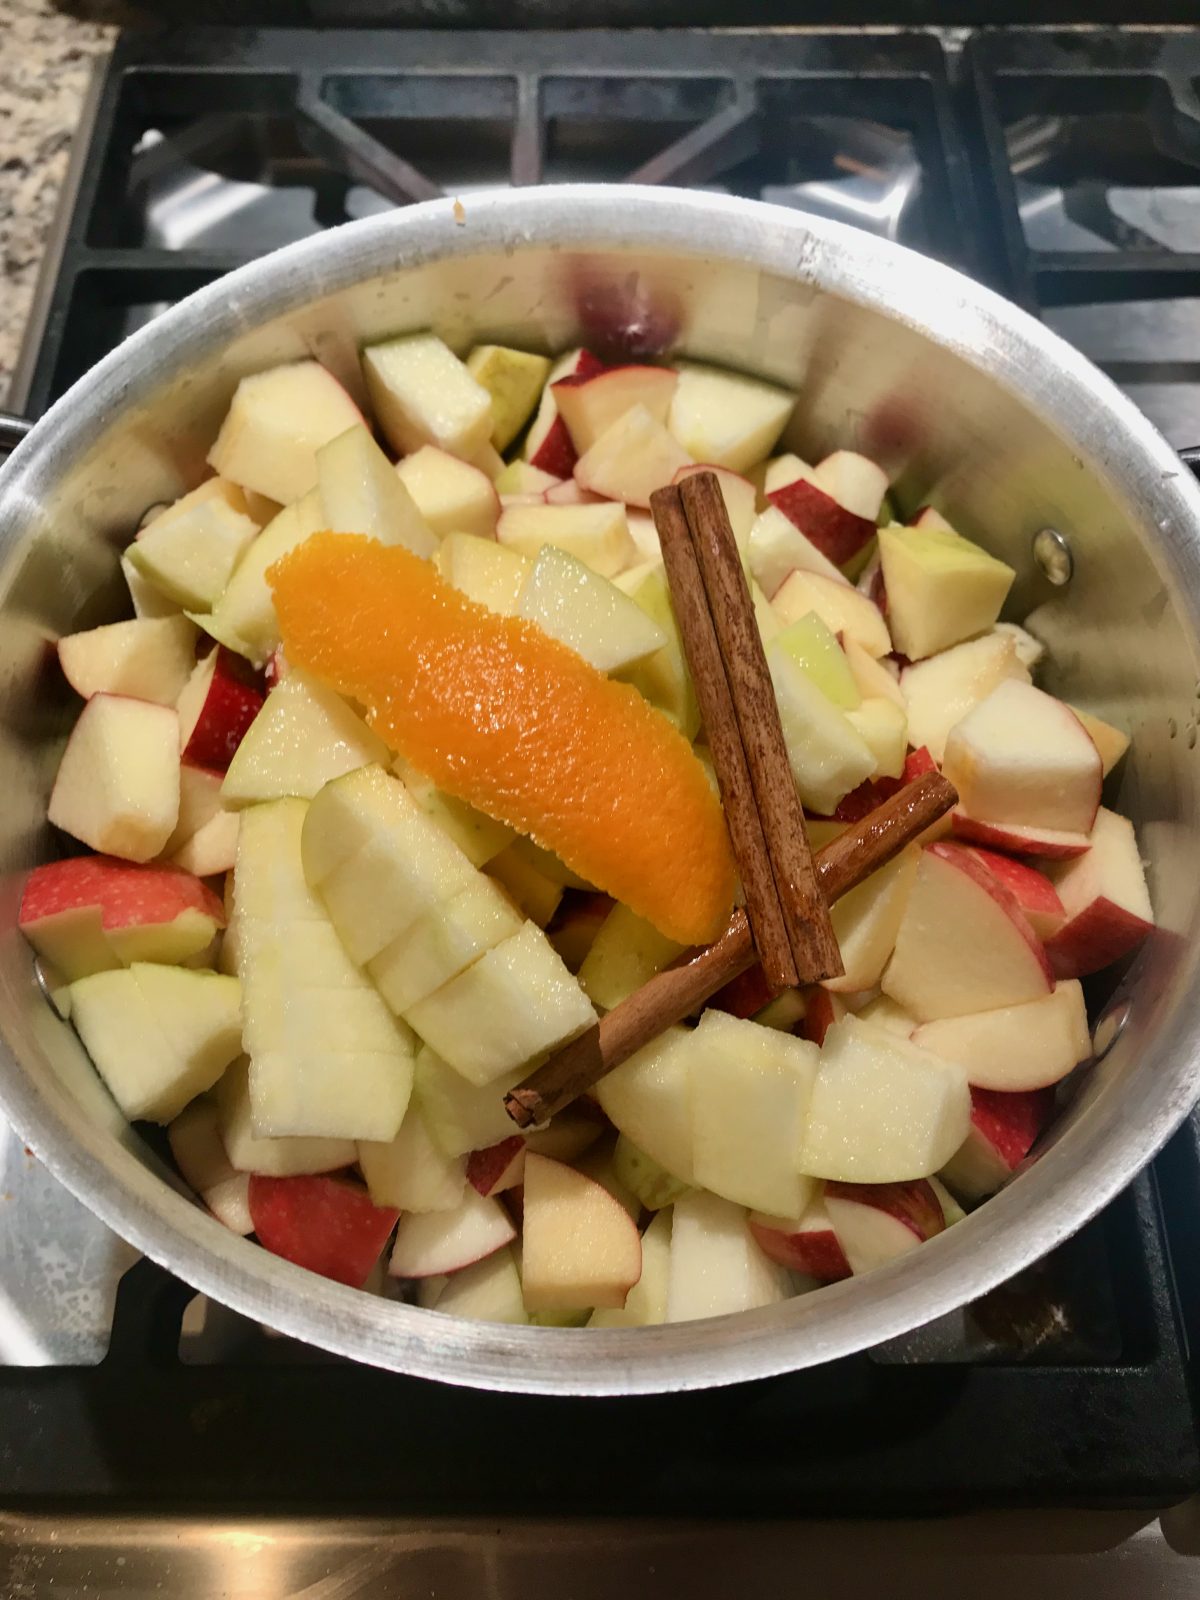 ingredients for applesauce in pot - chopped apples, cinnamon sticks, orange peel